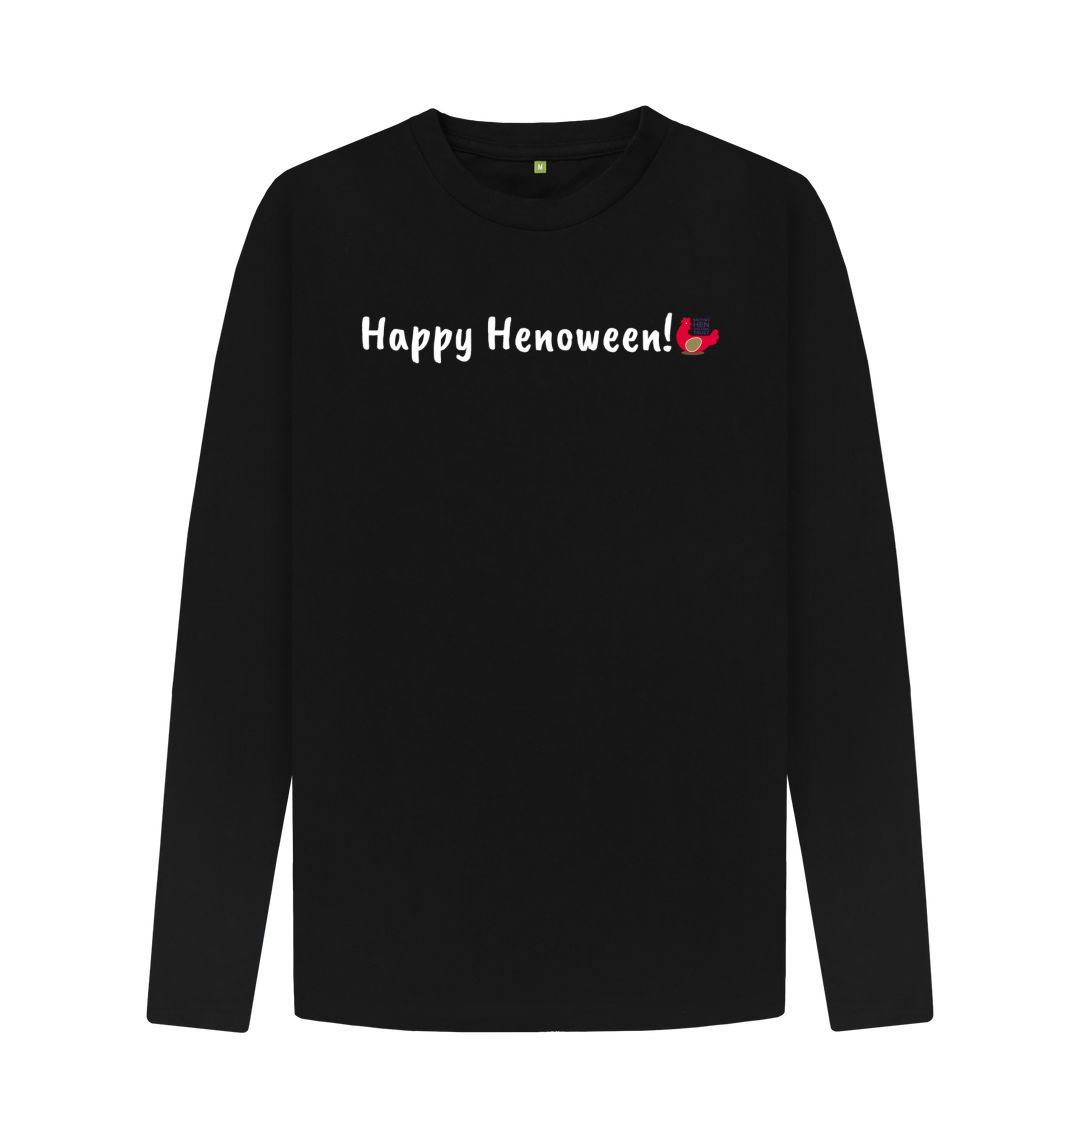 Black Happy Henoween! Men's Long Sleeve T-Shirt